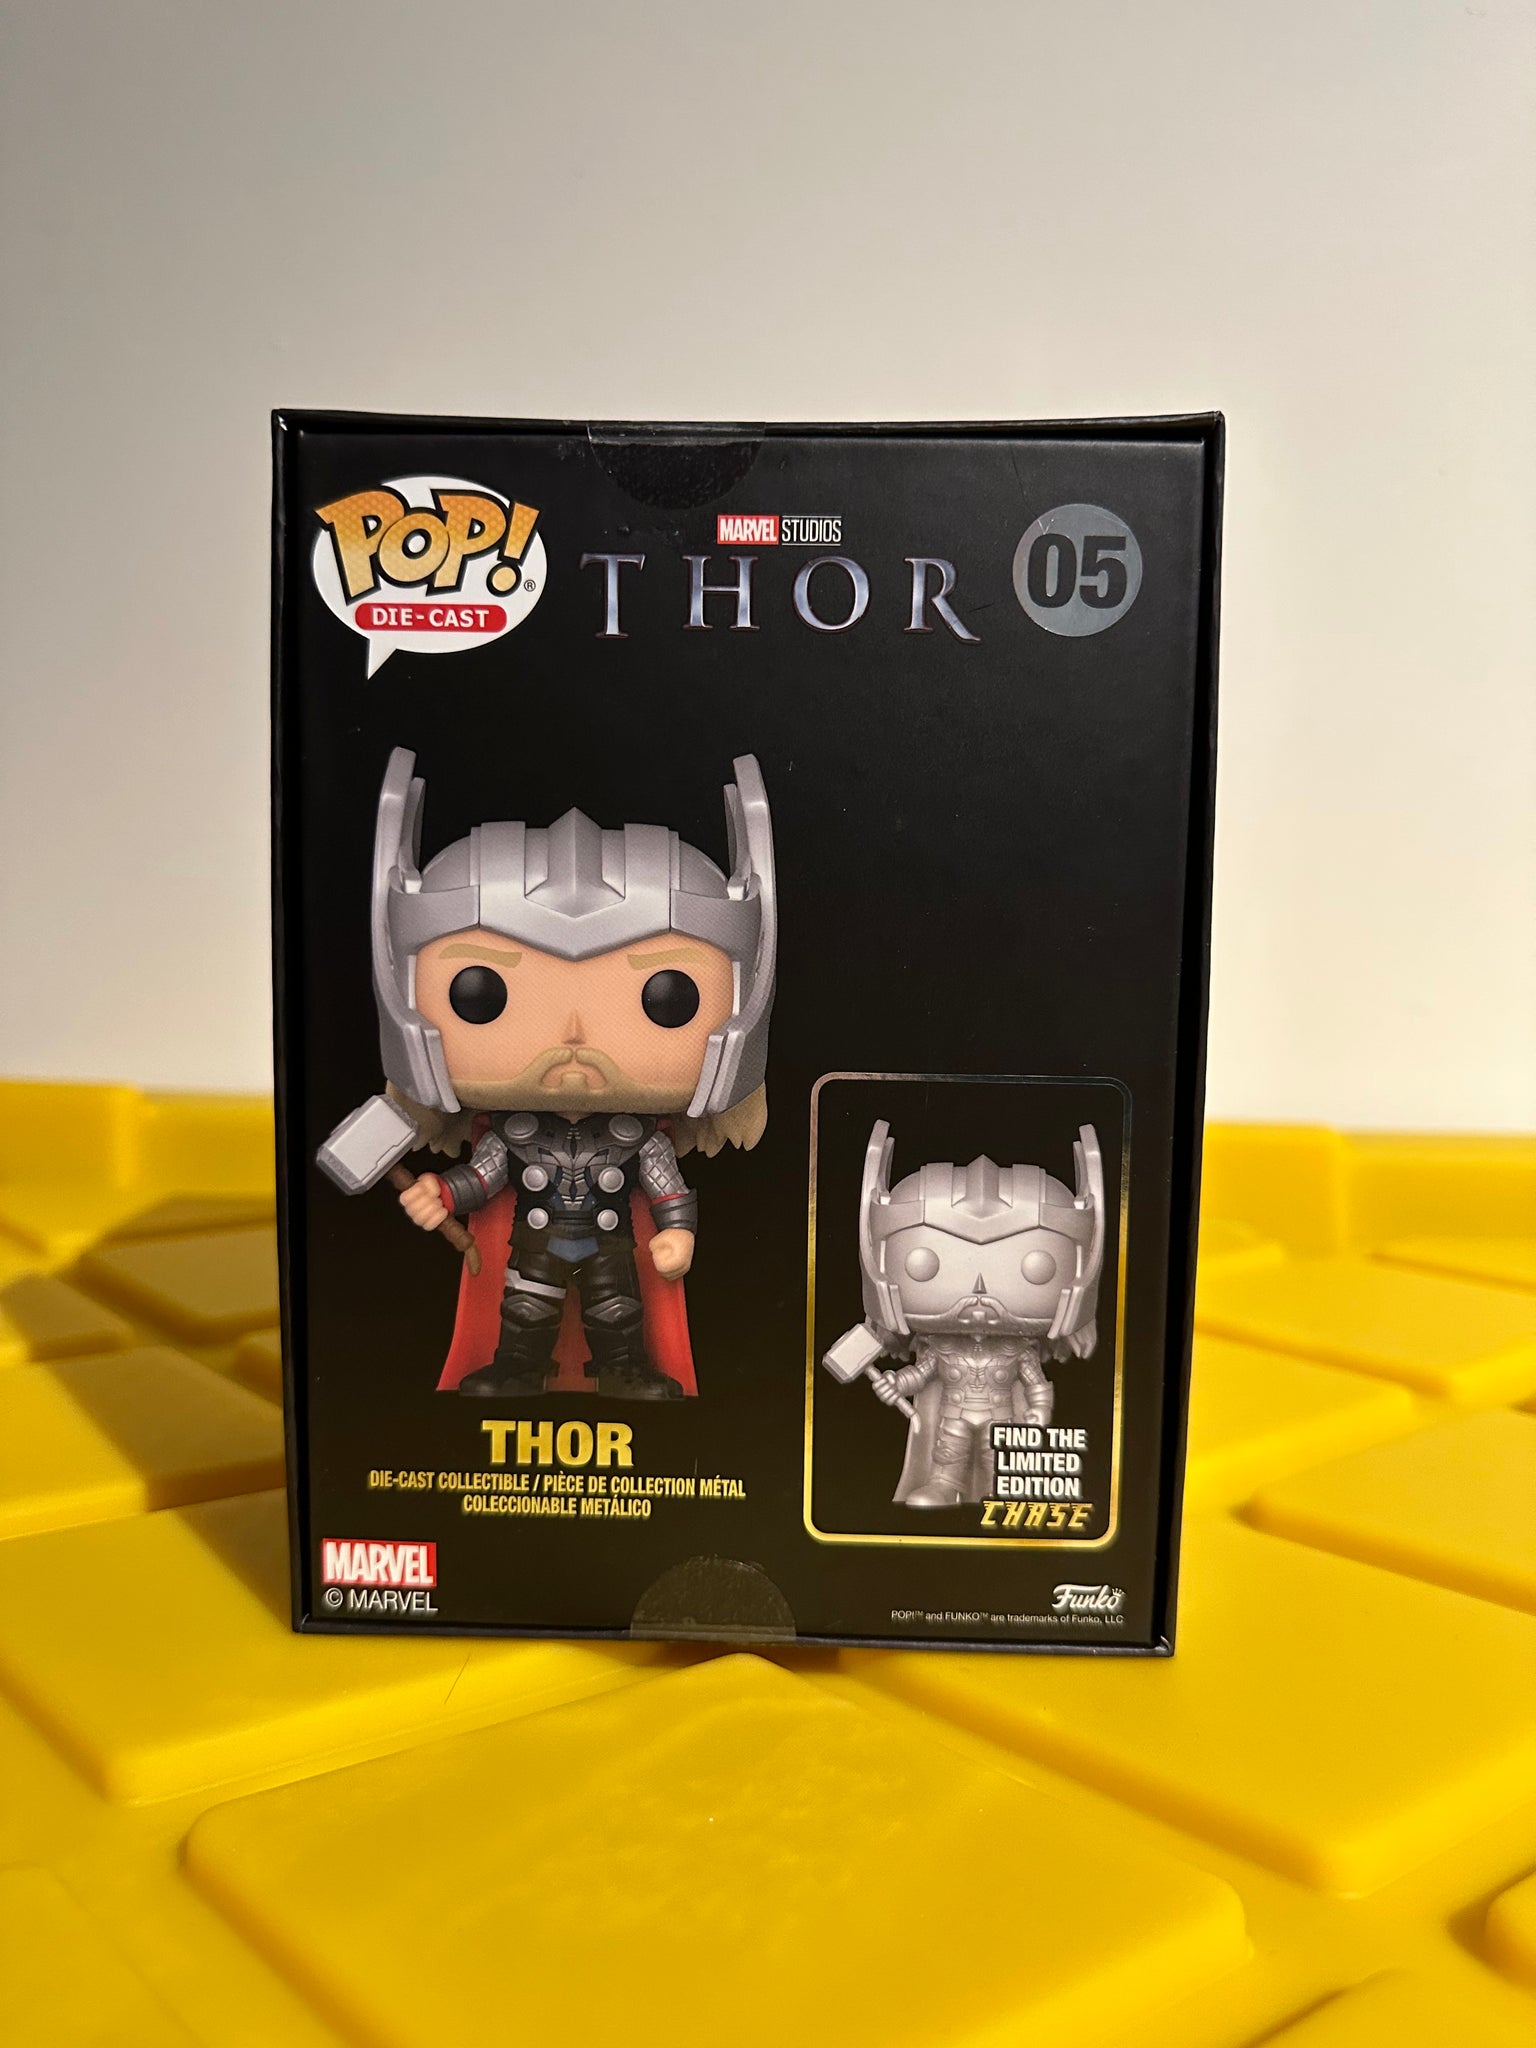 Buy Pop! Thor at Funko.